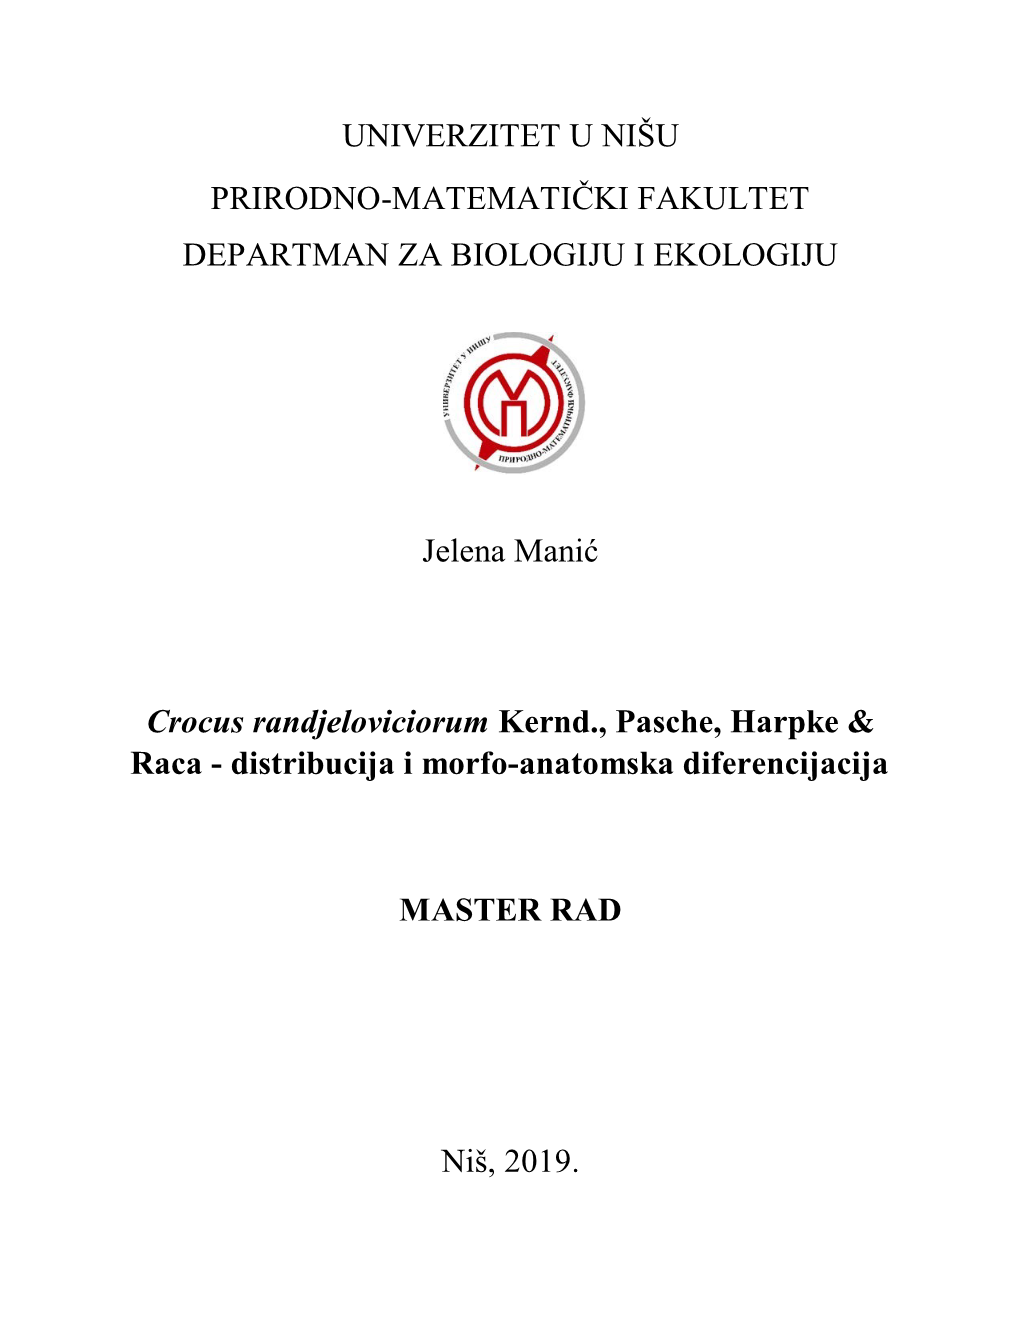 Crocus Randjeloviciorum Kernd., Pasche, Harpke & Raca